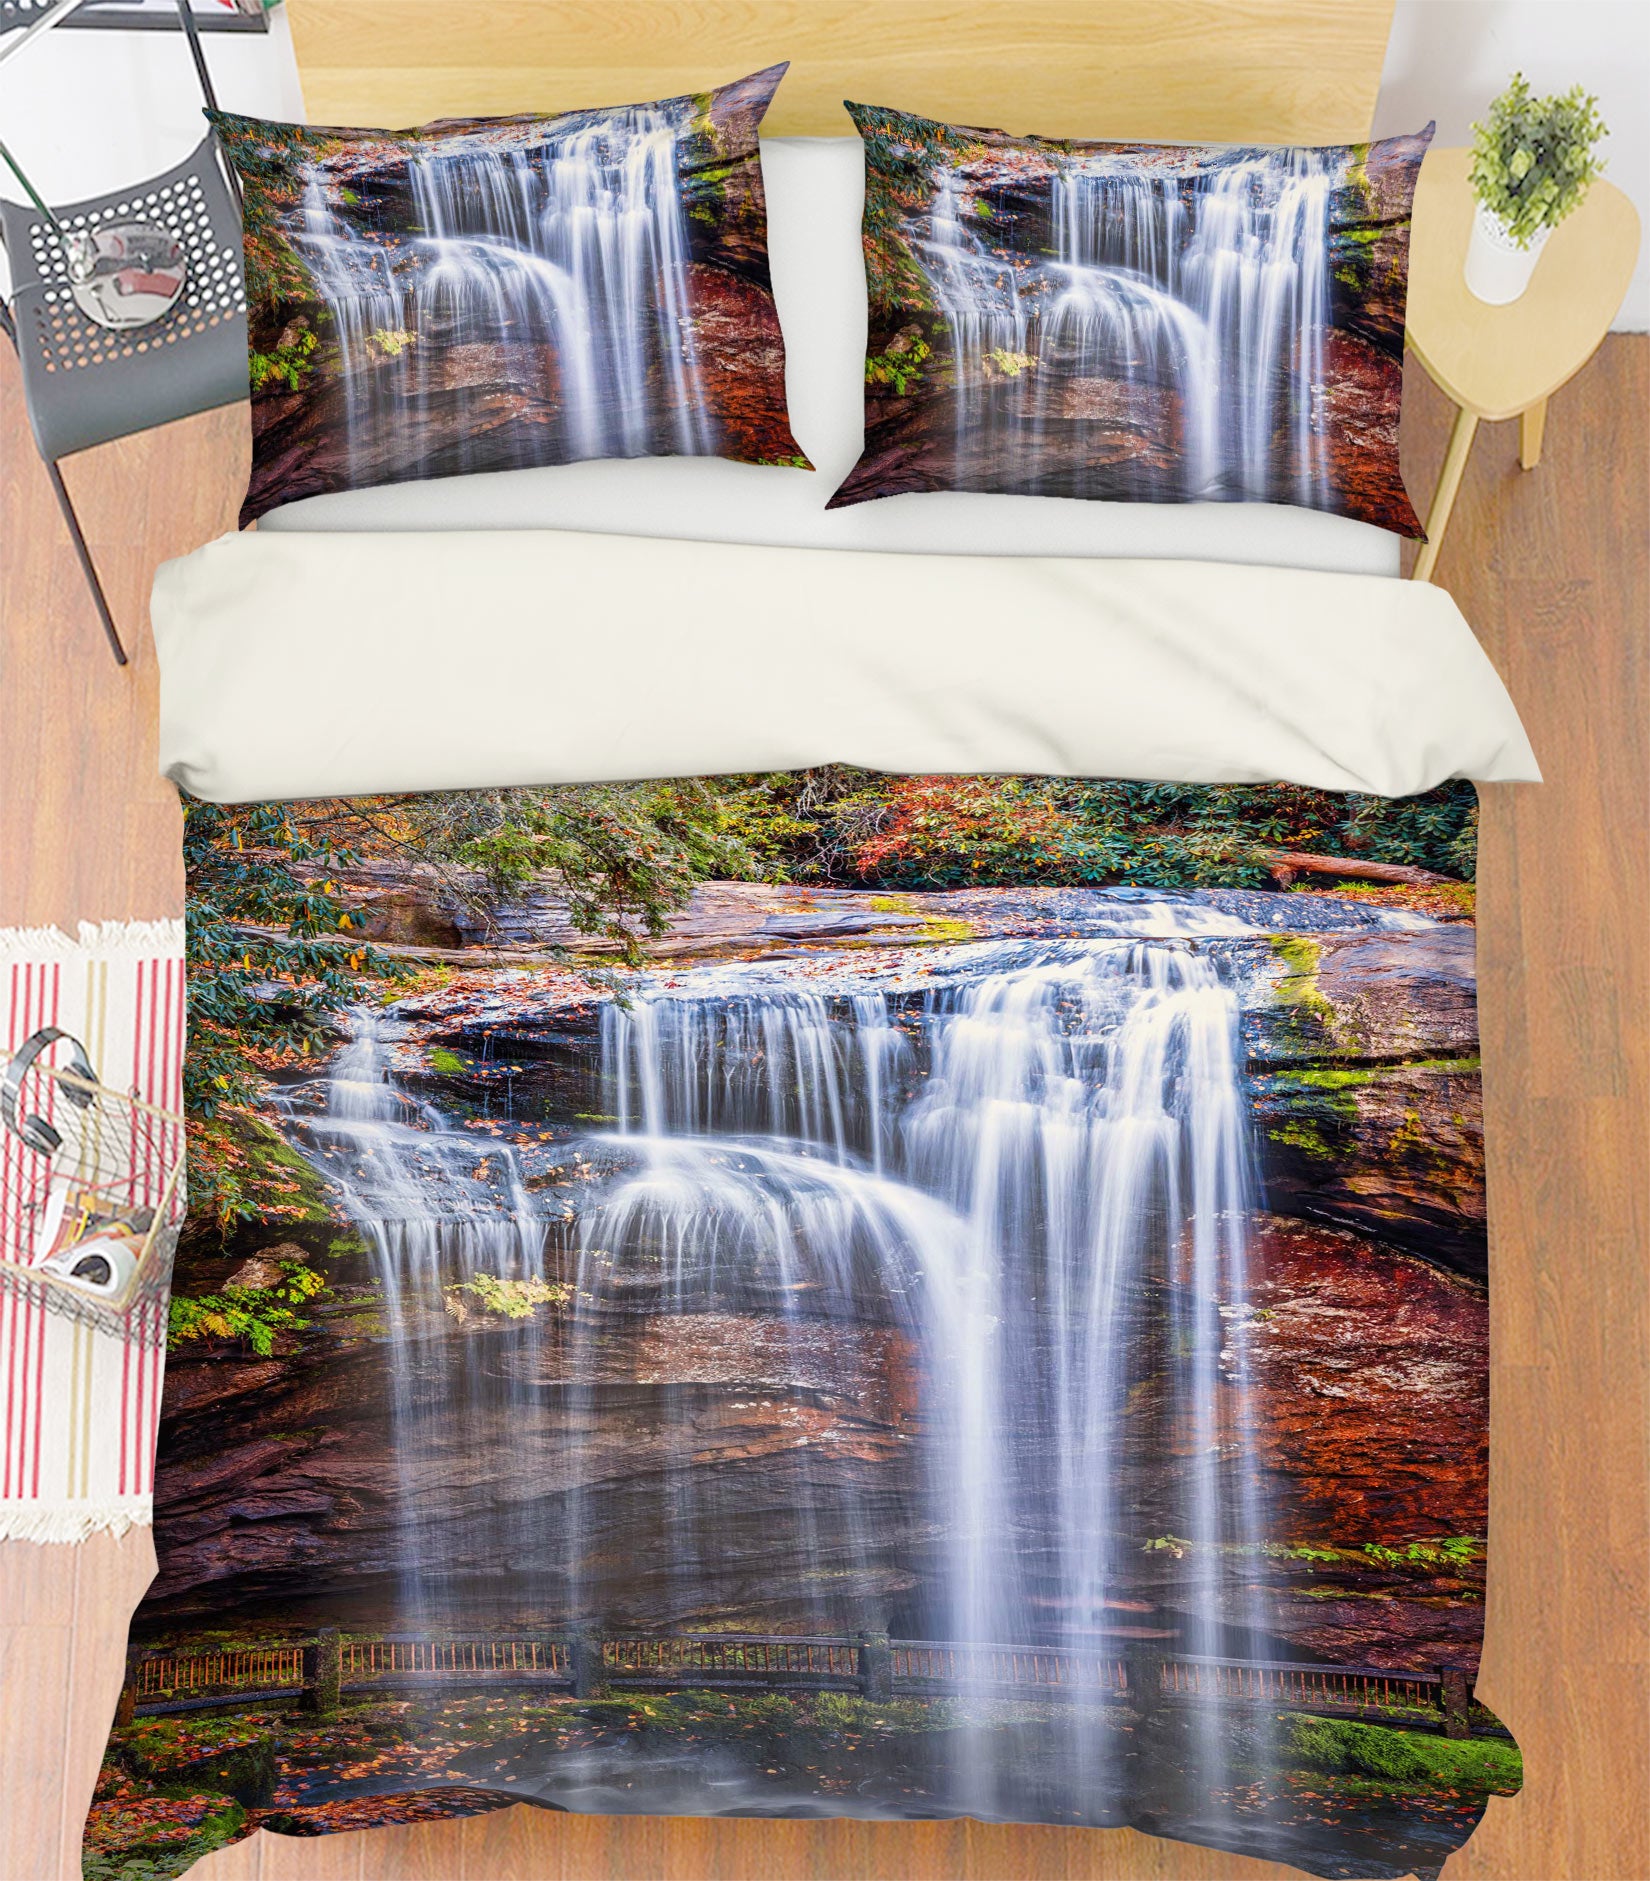 3D Fall 8568 Beth Sheridan Bedding Bed Pillowcases Quilt